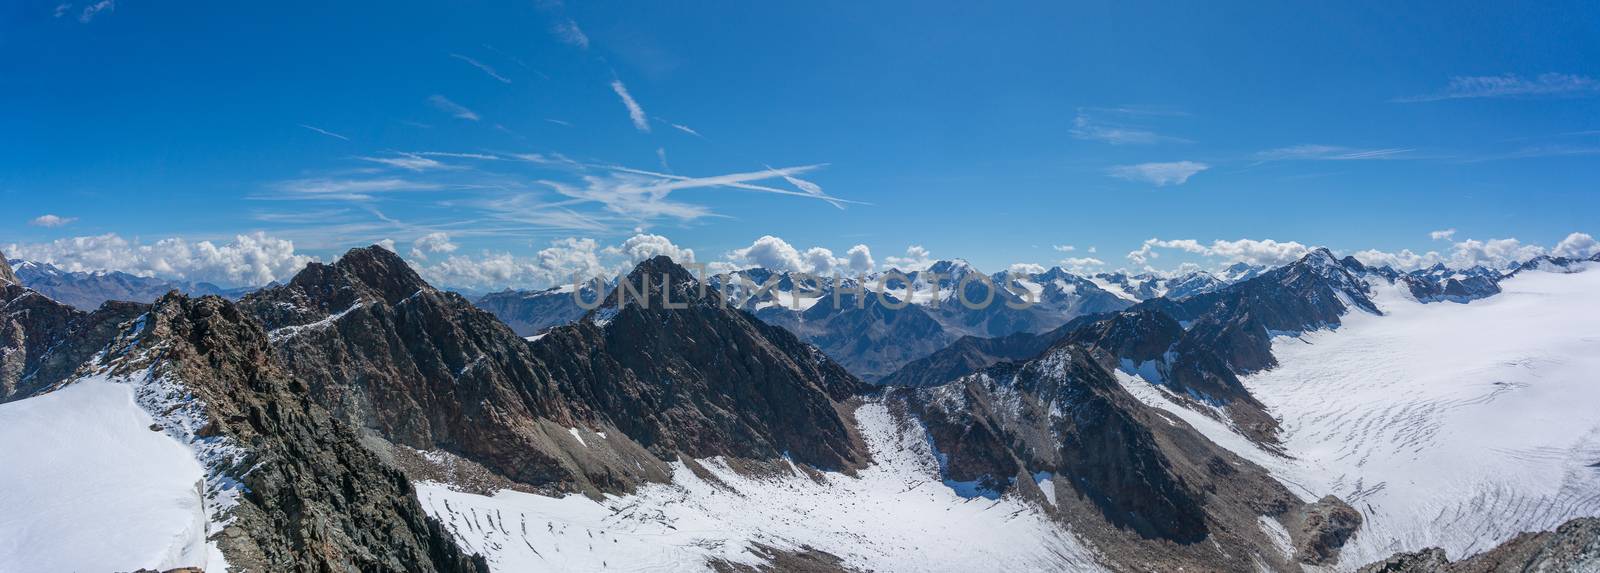 Hight mountain landscape in Tyrol Alps by javax